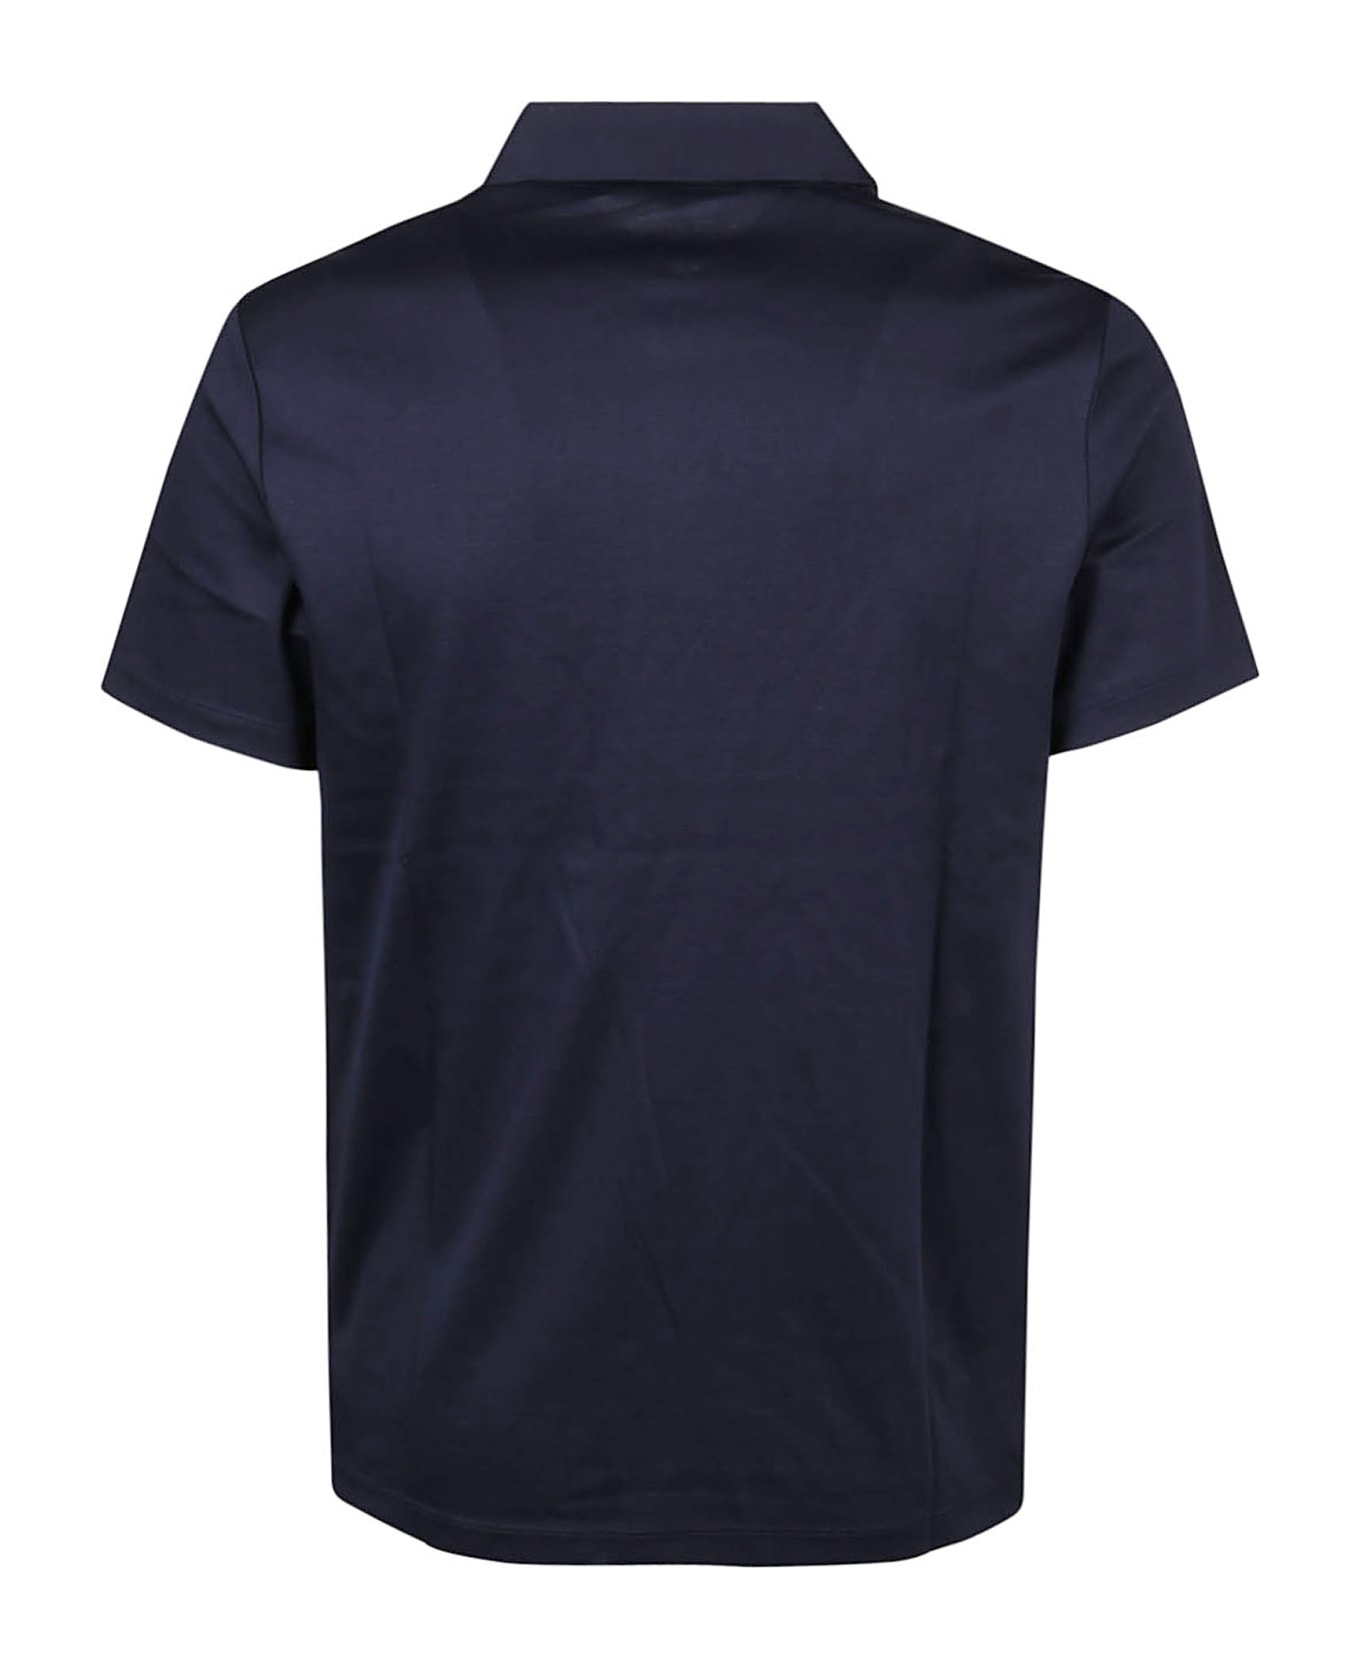 Michael Kors Sleek Polo Shirt - Midnight